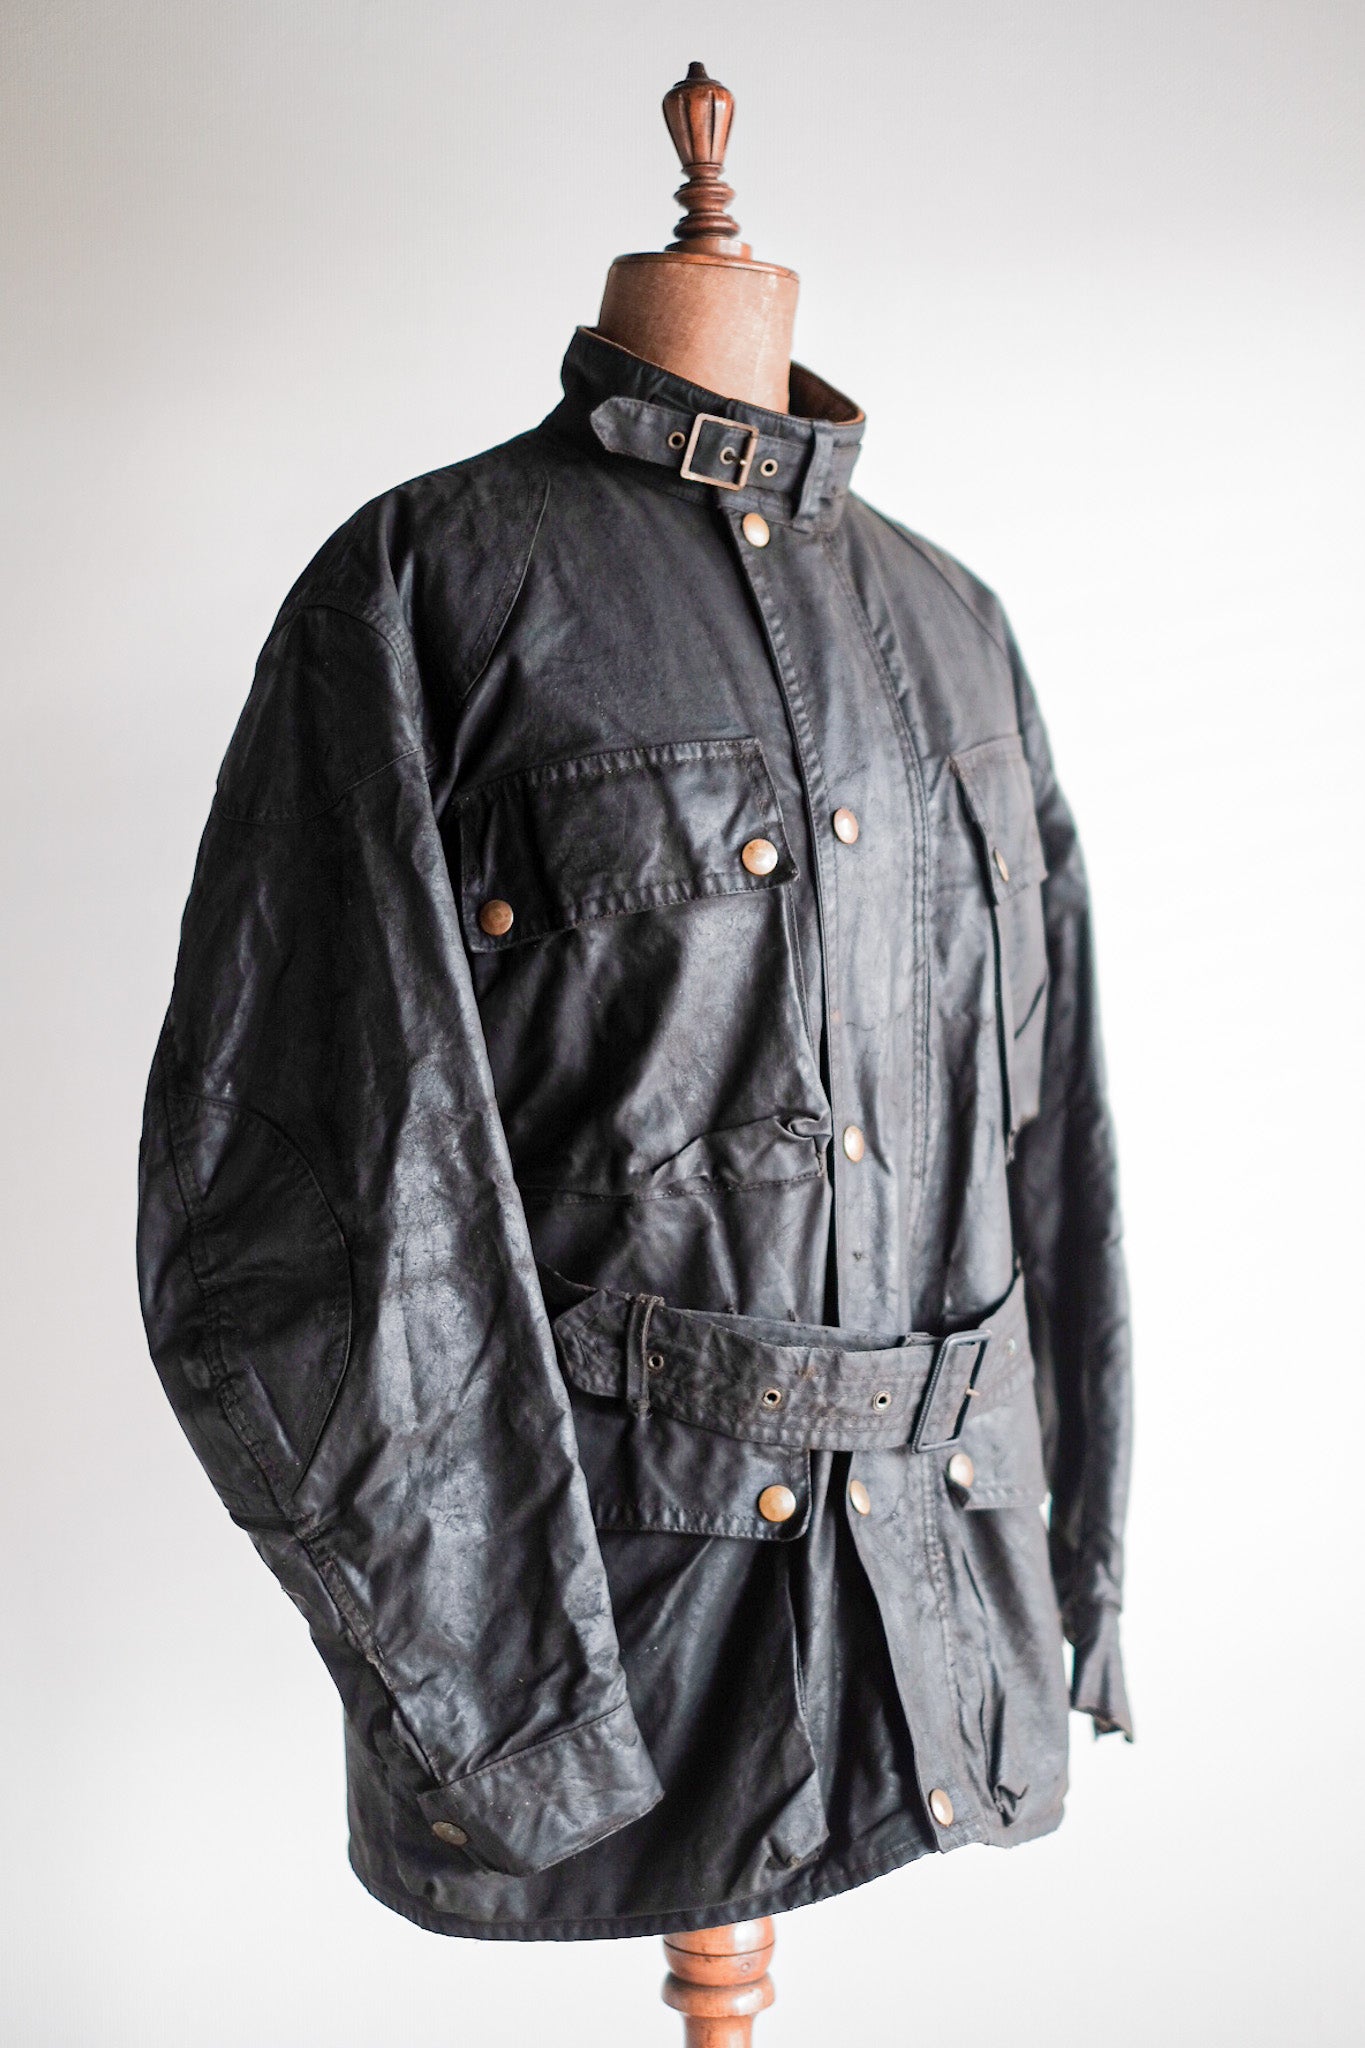 [~ 60's] Vintage Belstaff Waxed Jacket "Trialmaster" "Red Tag"